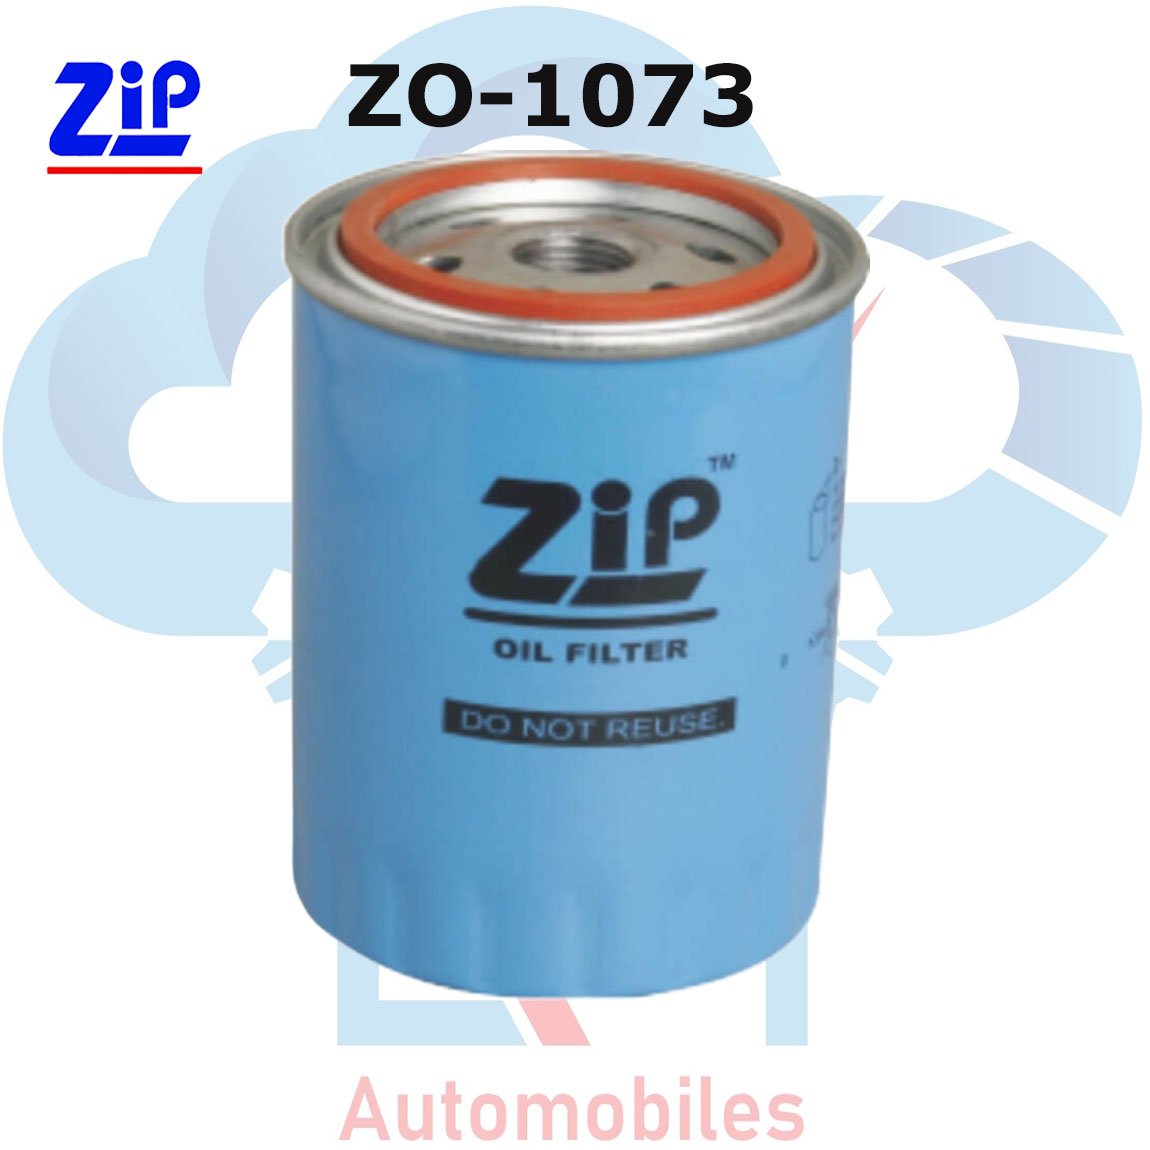 Oil Filter For Hyundai Tucson in Zip Filter